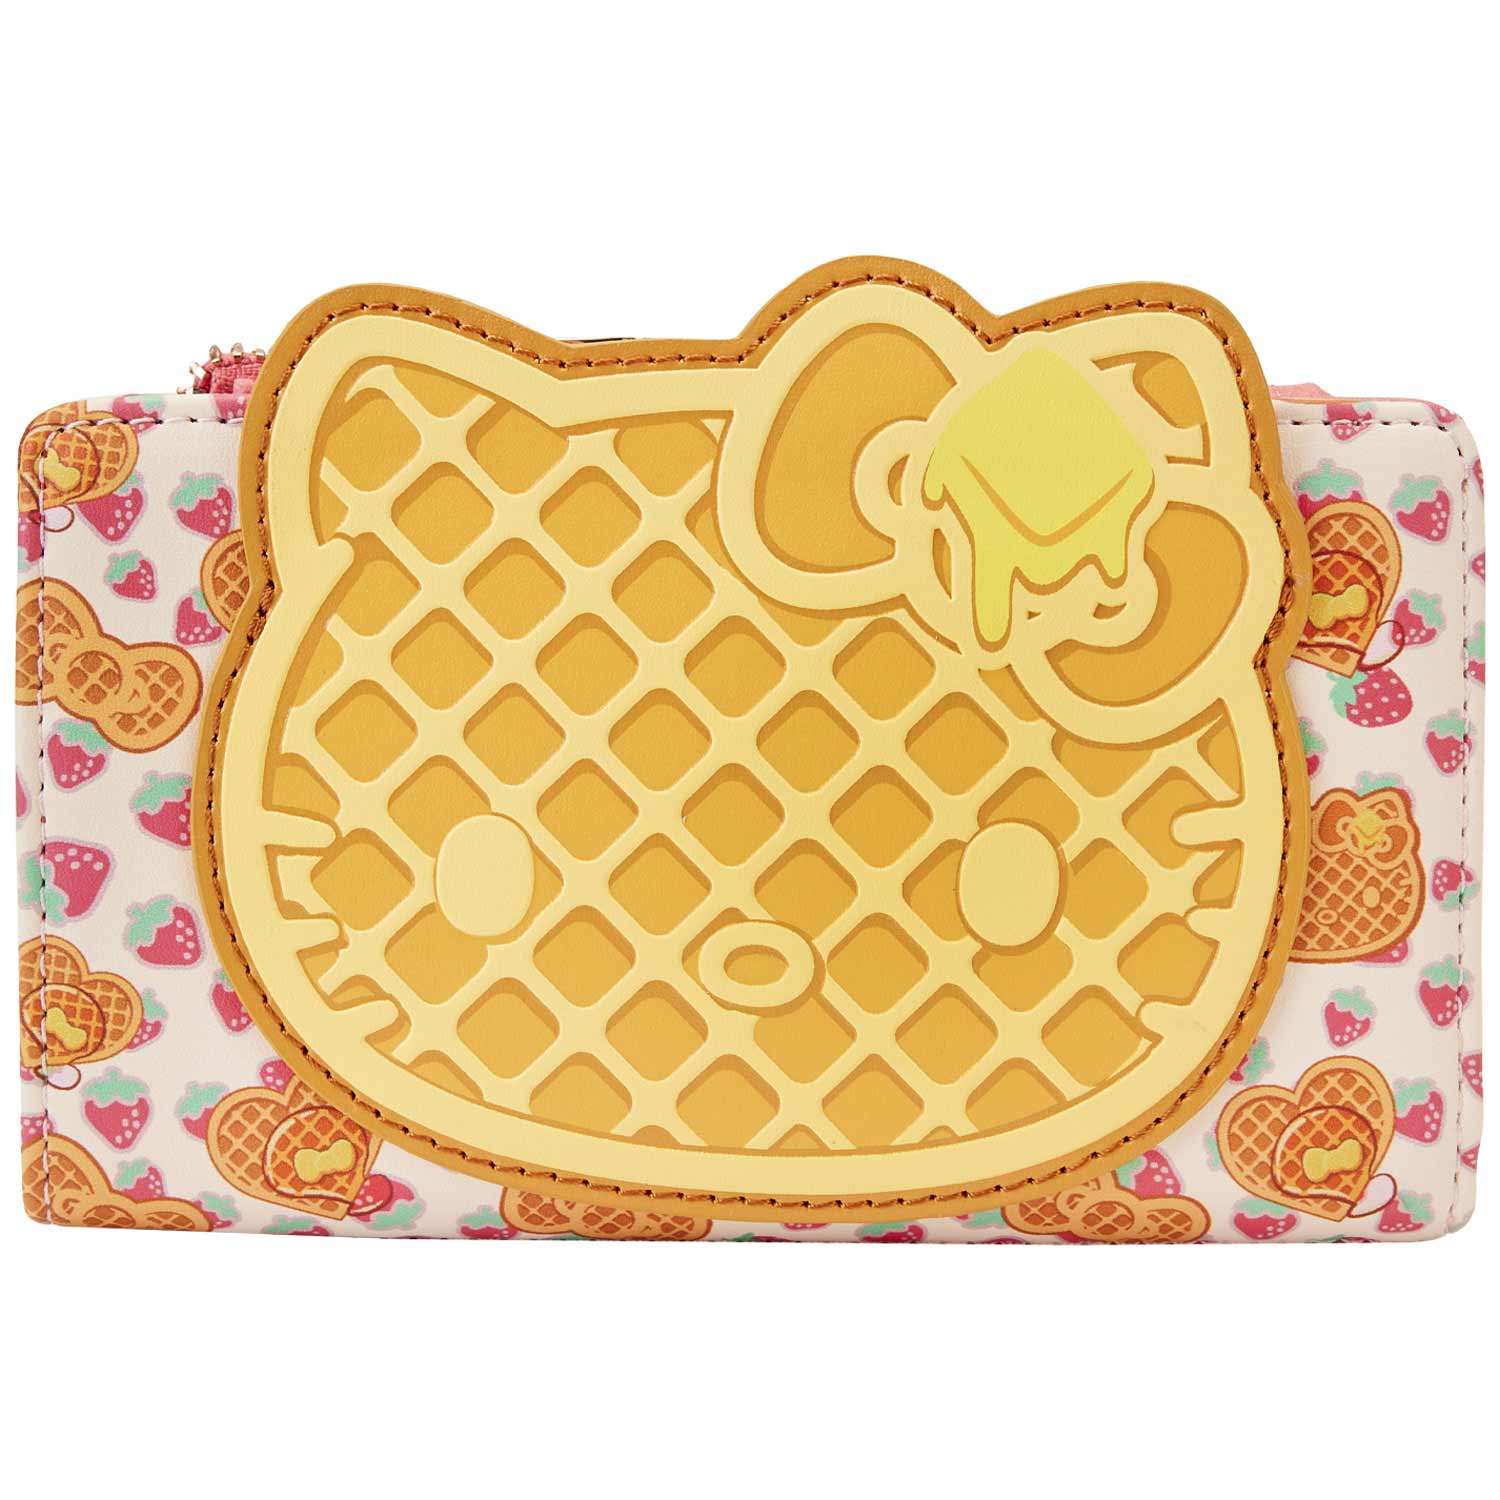 Loungefly x Sanrio Hello Kitty Breakfast Waffle Wallet